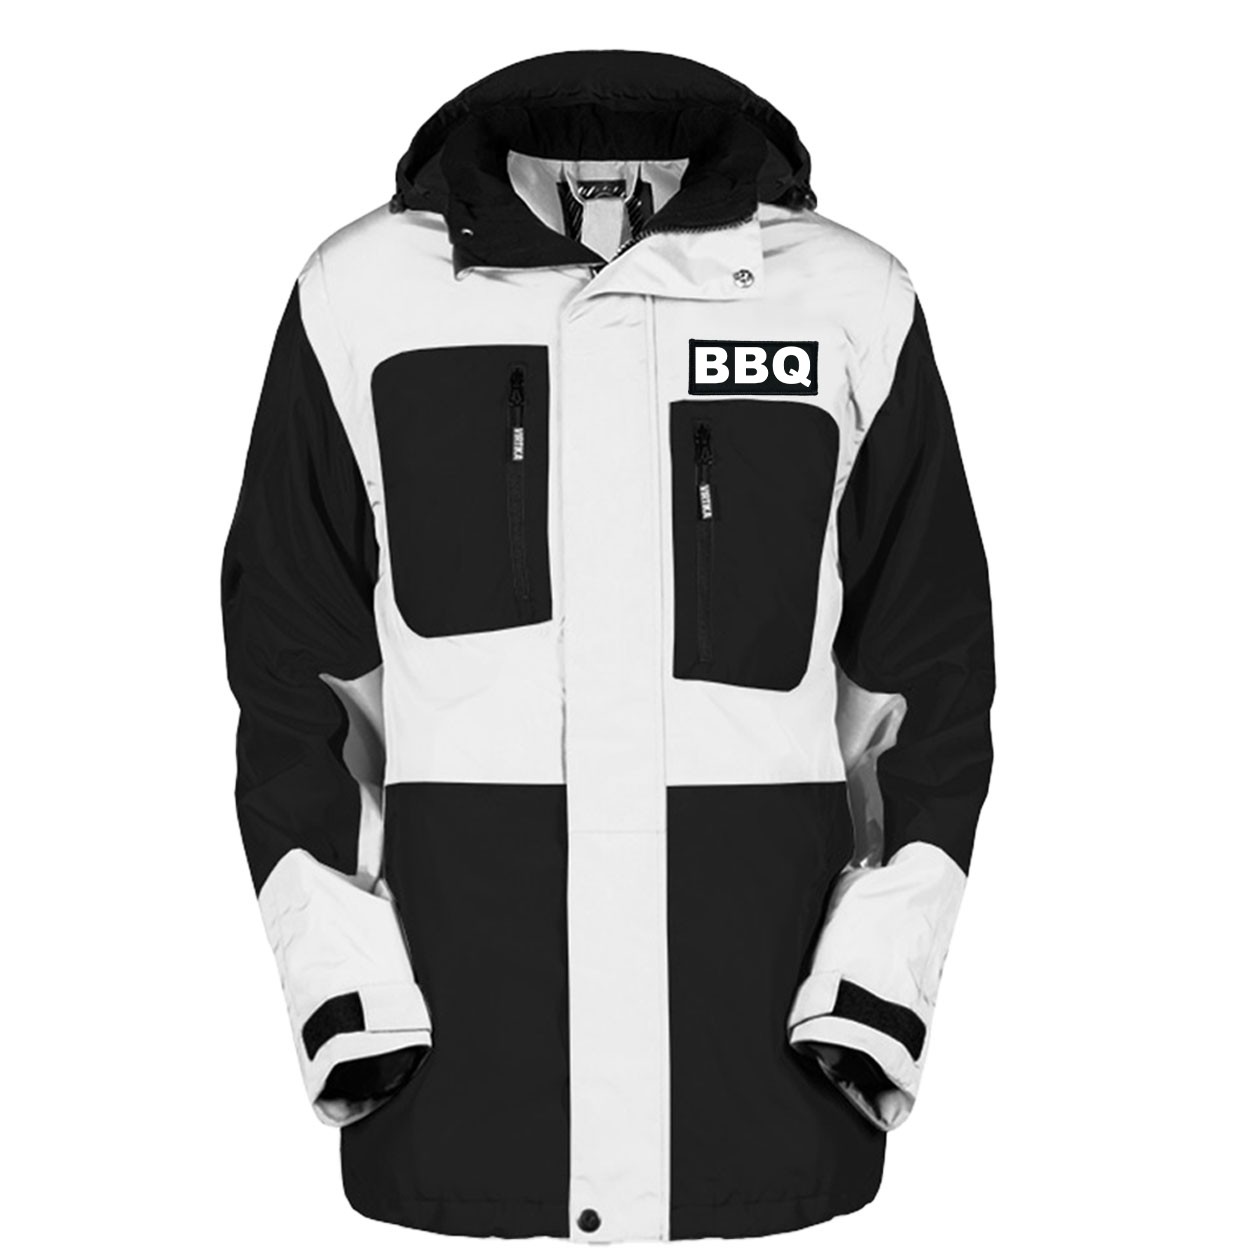 BBQ Brand Logo Classic Woven Patch Pro Snowboard Jacket (Black/White)